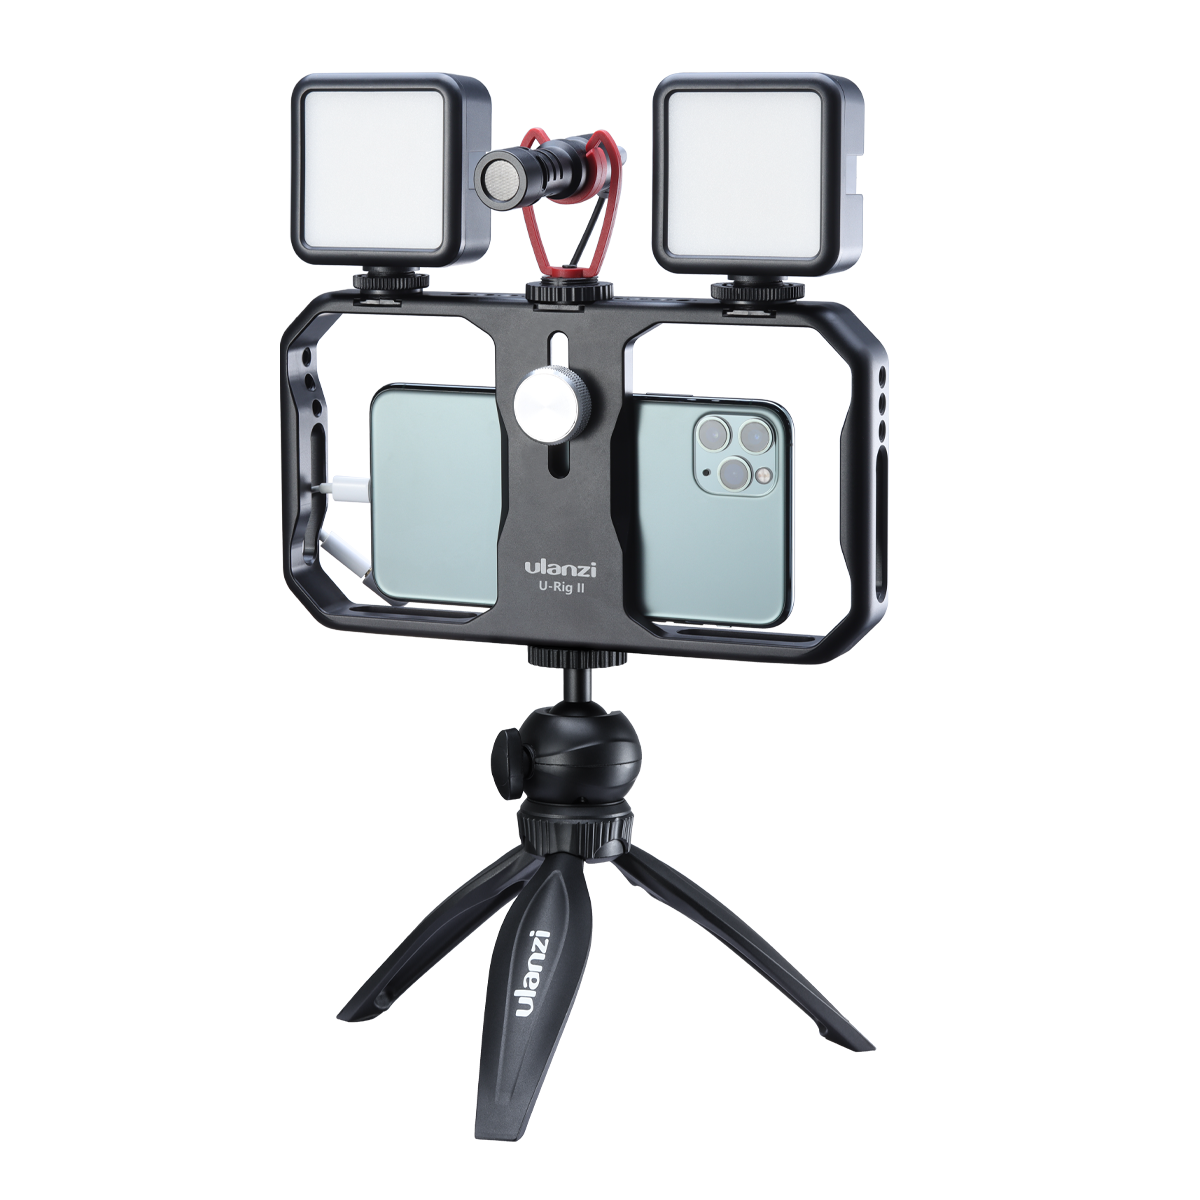 

Ulanzi U-Rig II Metal Universal Phone Video Rig Handheld Grip Stabilizer Vlog Cage Case Grip Filmmaking Case for iPhone